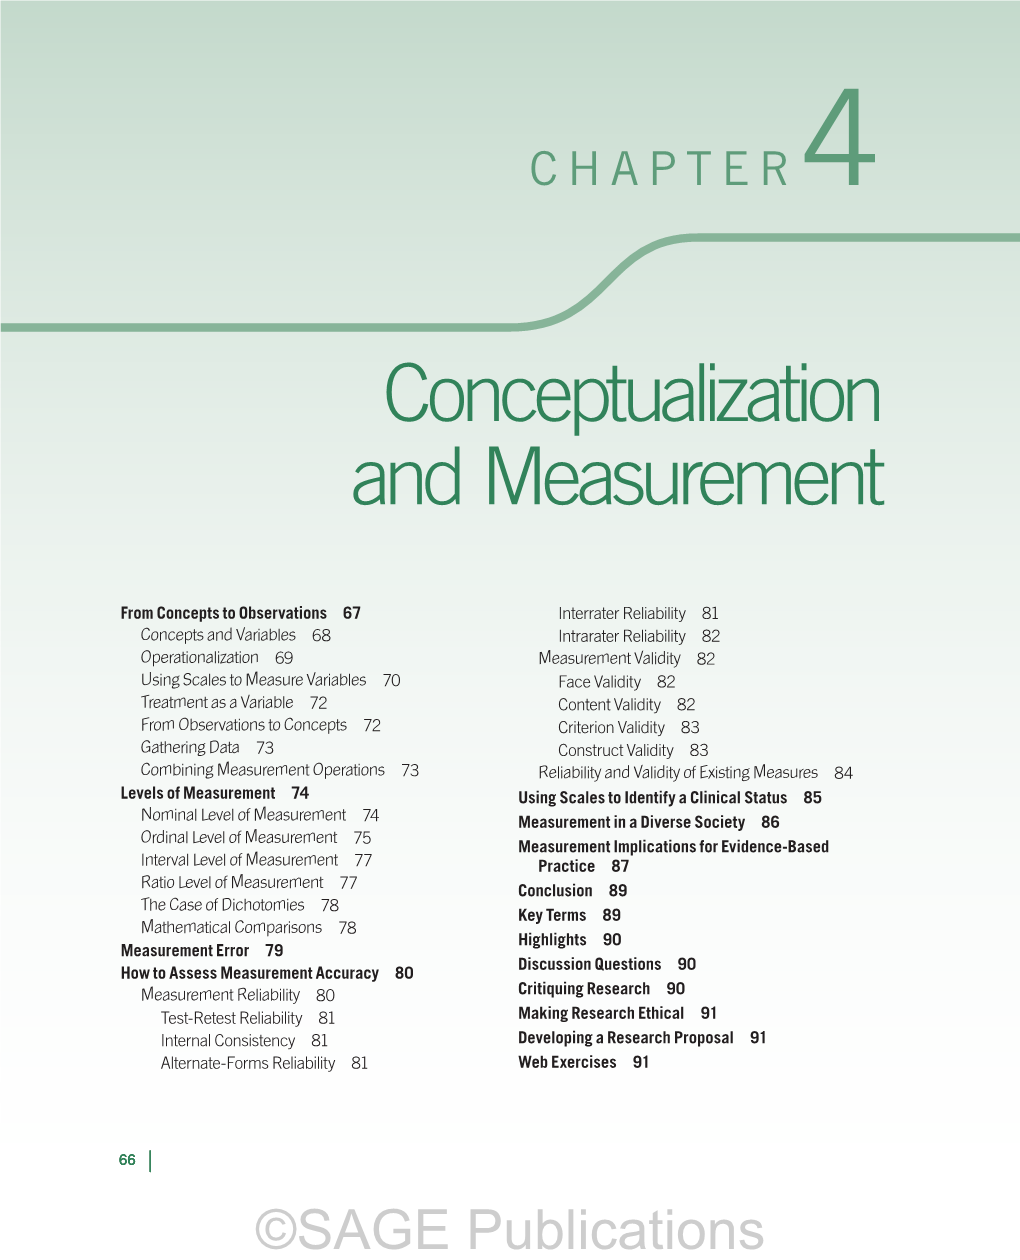 Conceptualization and Measurement